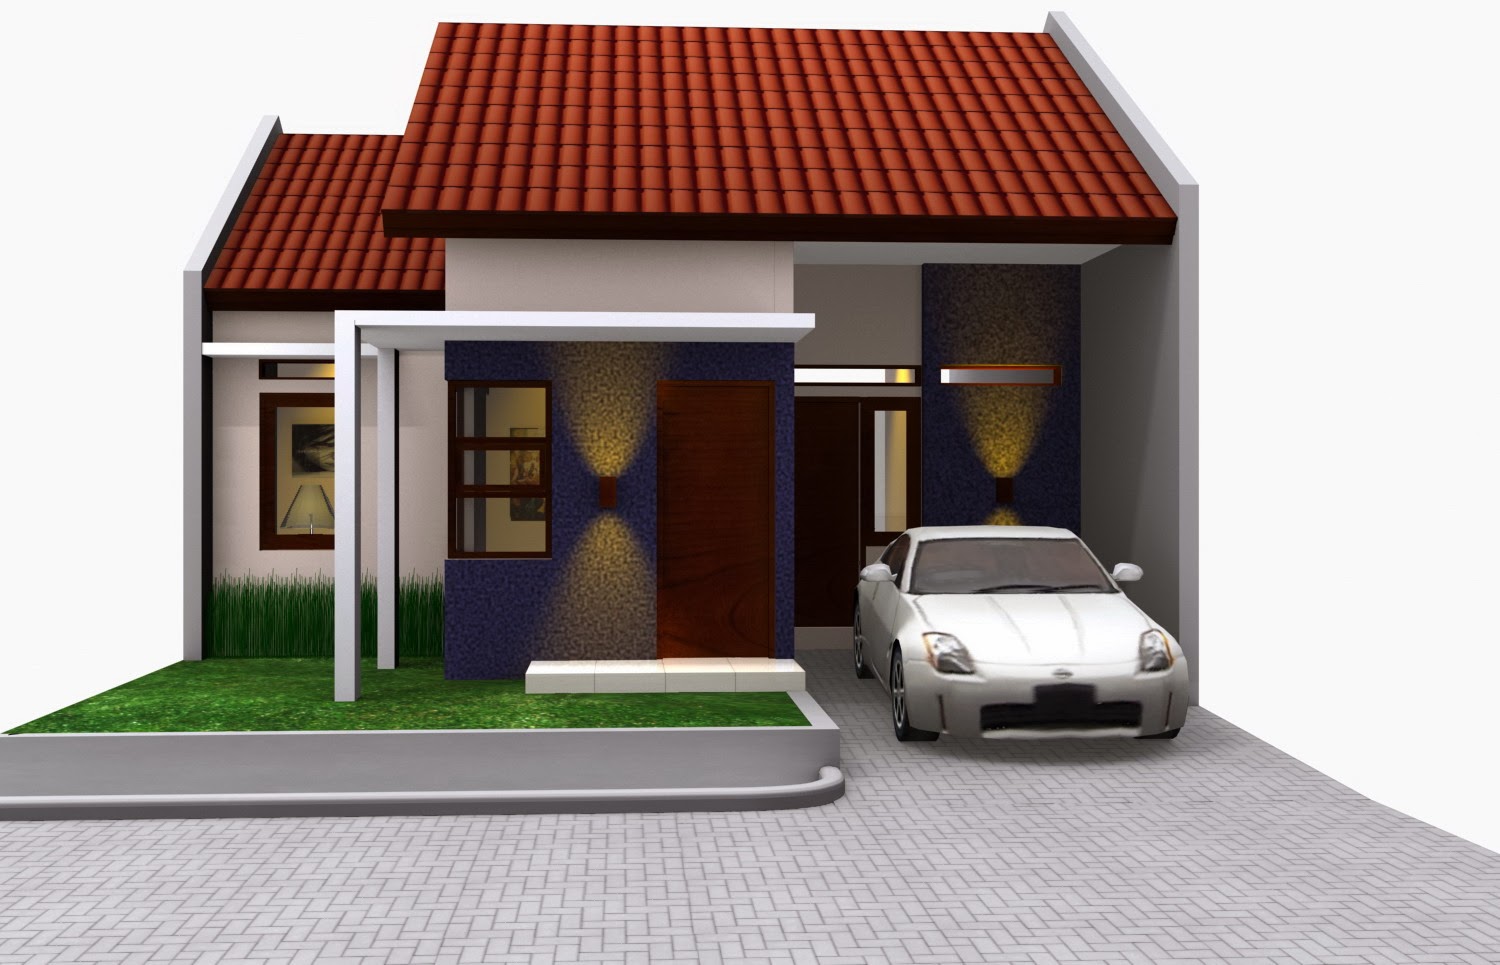 Kumpulan Desain Rumah Minimalis Ukuran 5x10 Kumpulan Desain Rumah